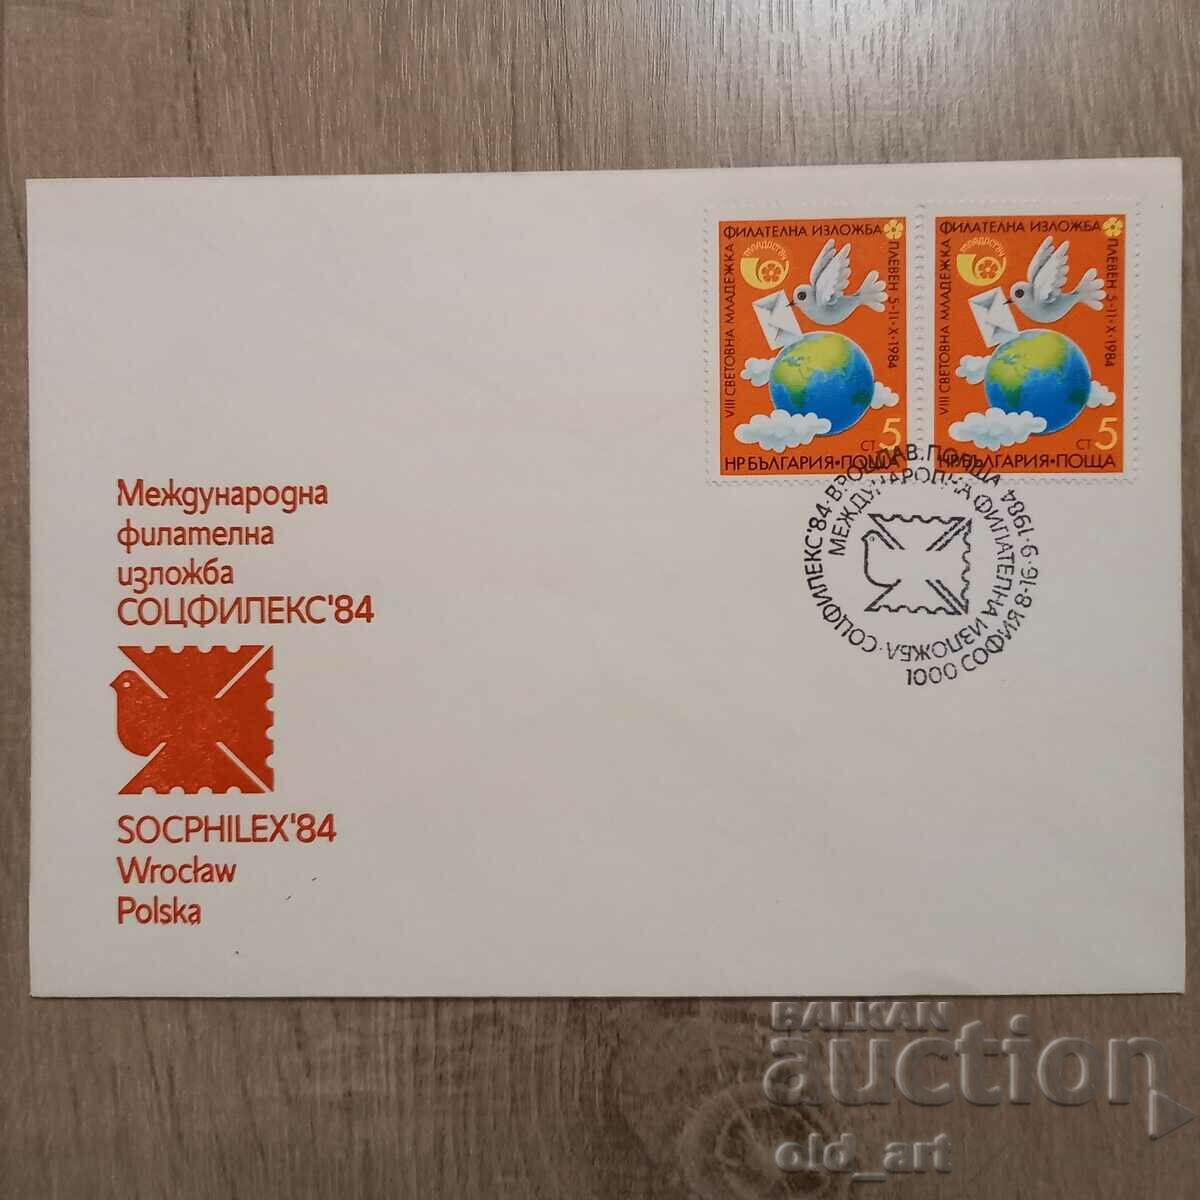 Postal envelope - Sotsfilex 1984, Wroclaw